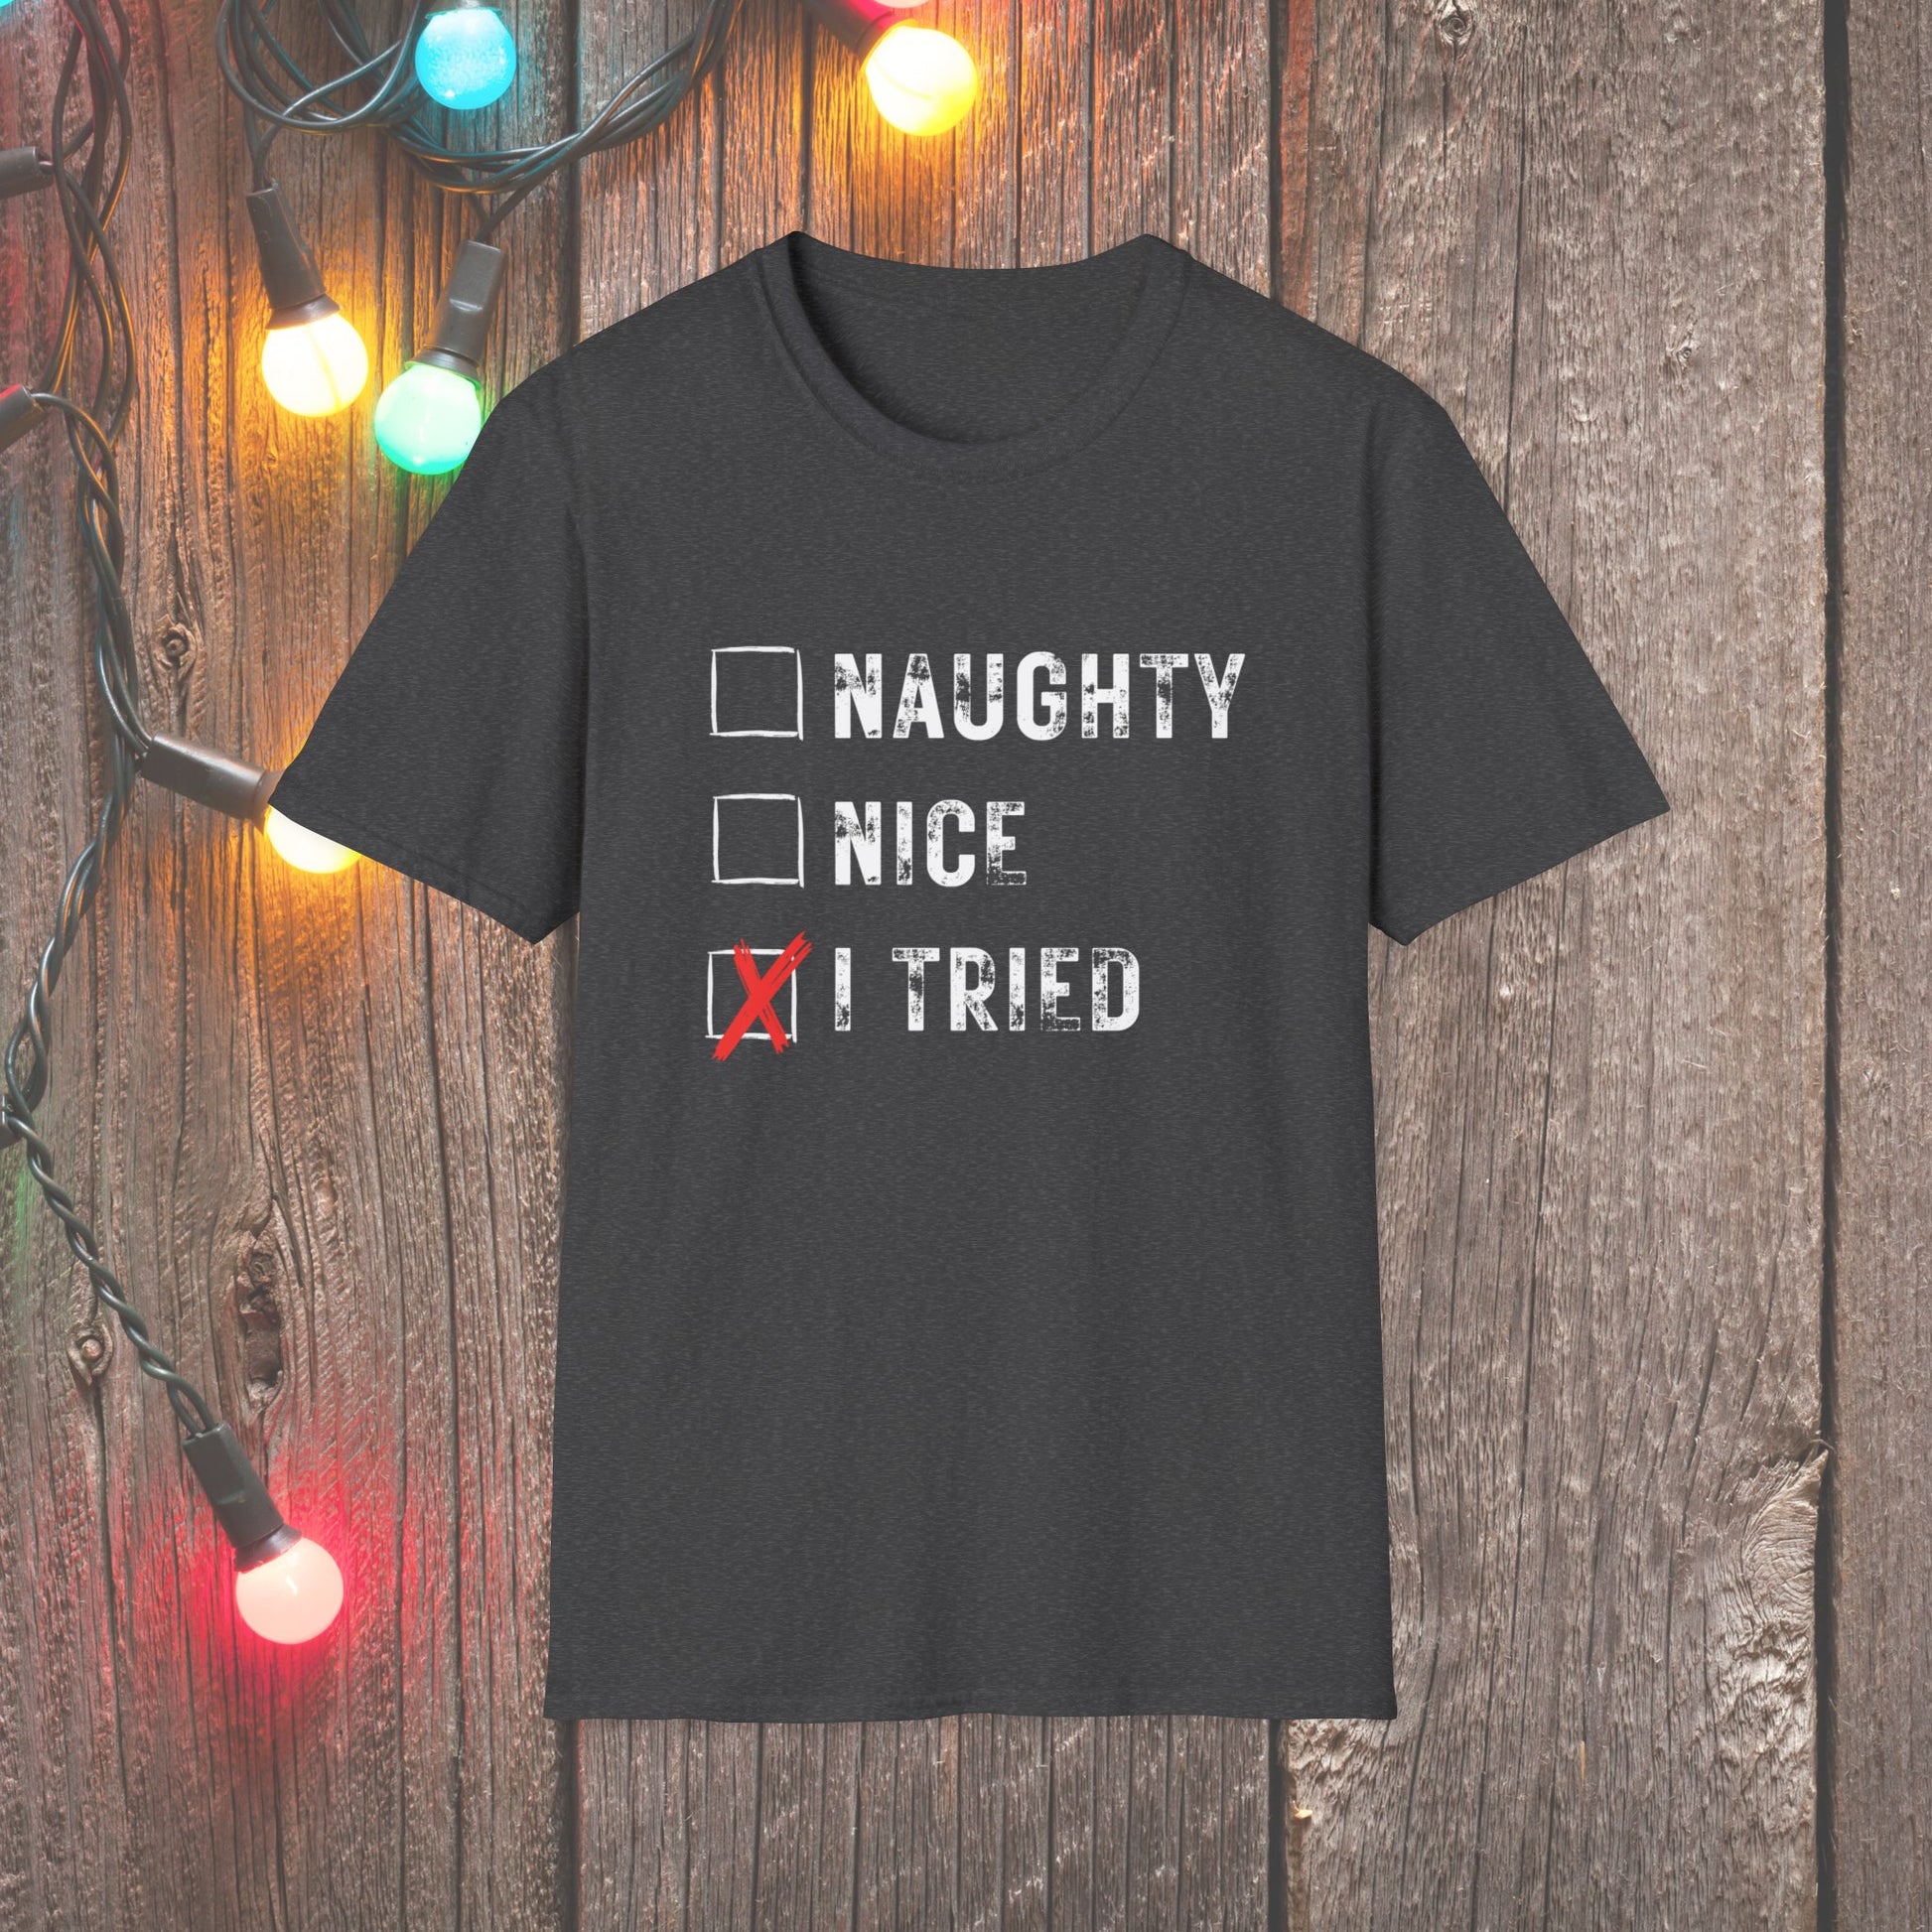 Christmas T-Shirt - Naughty Nice I Tried - Mens Christmas Shirts - Youth and Adult Christmas TShirts T-Shirts Graphic Avenue Dark Heather Adult Small 